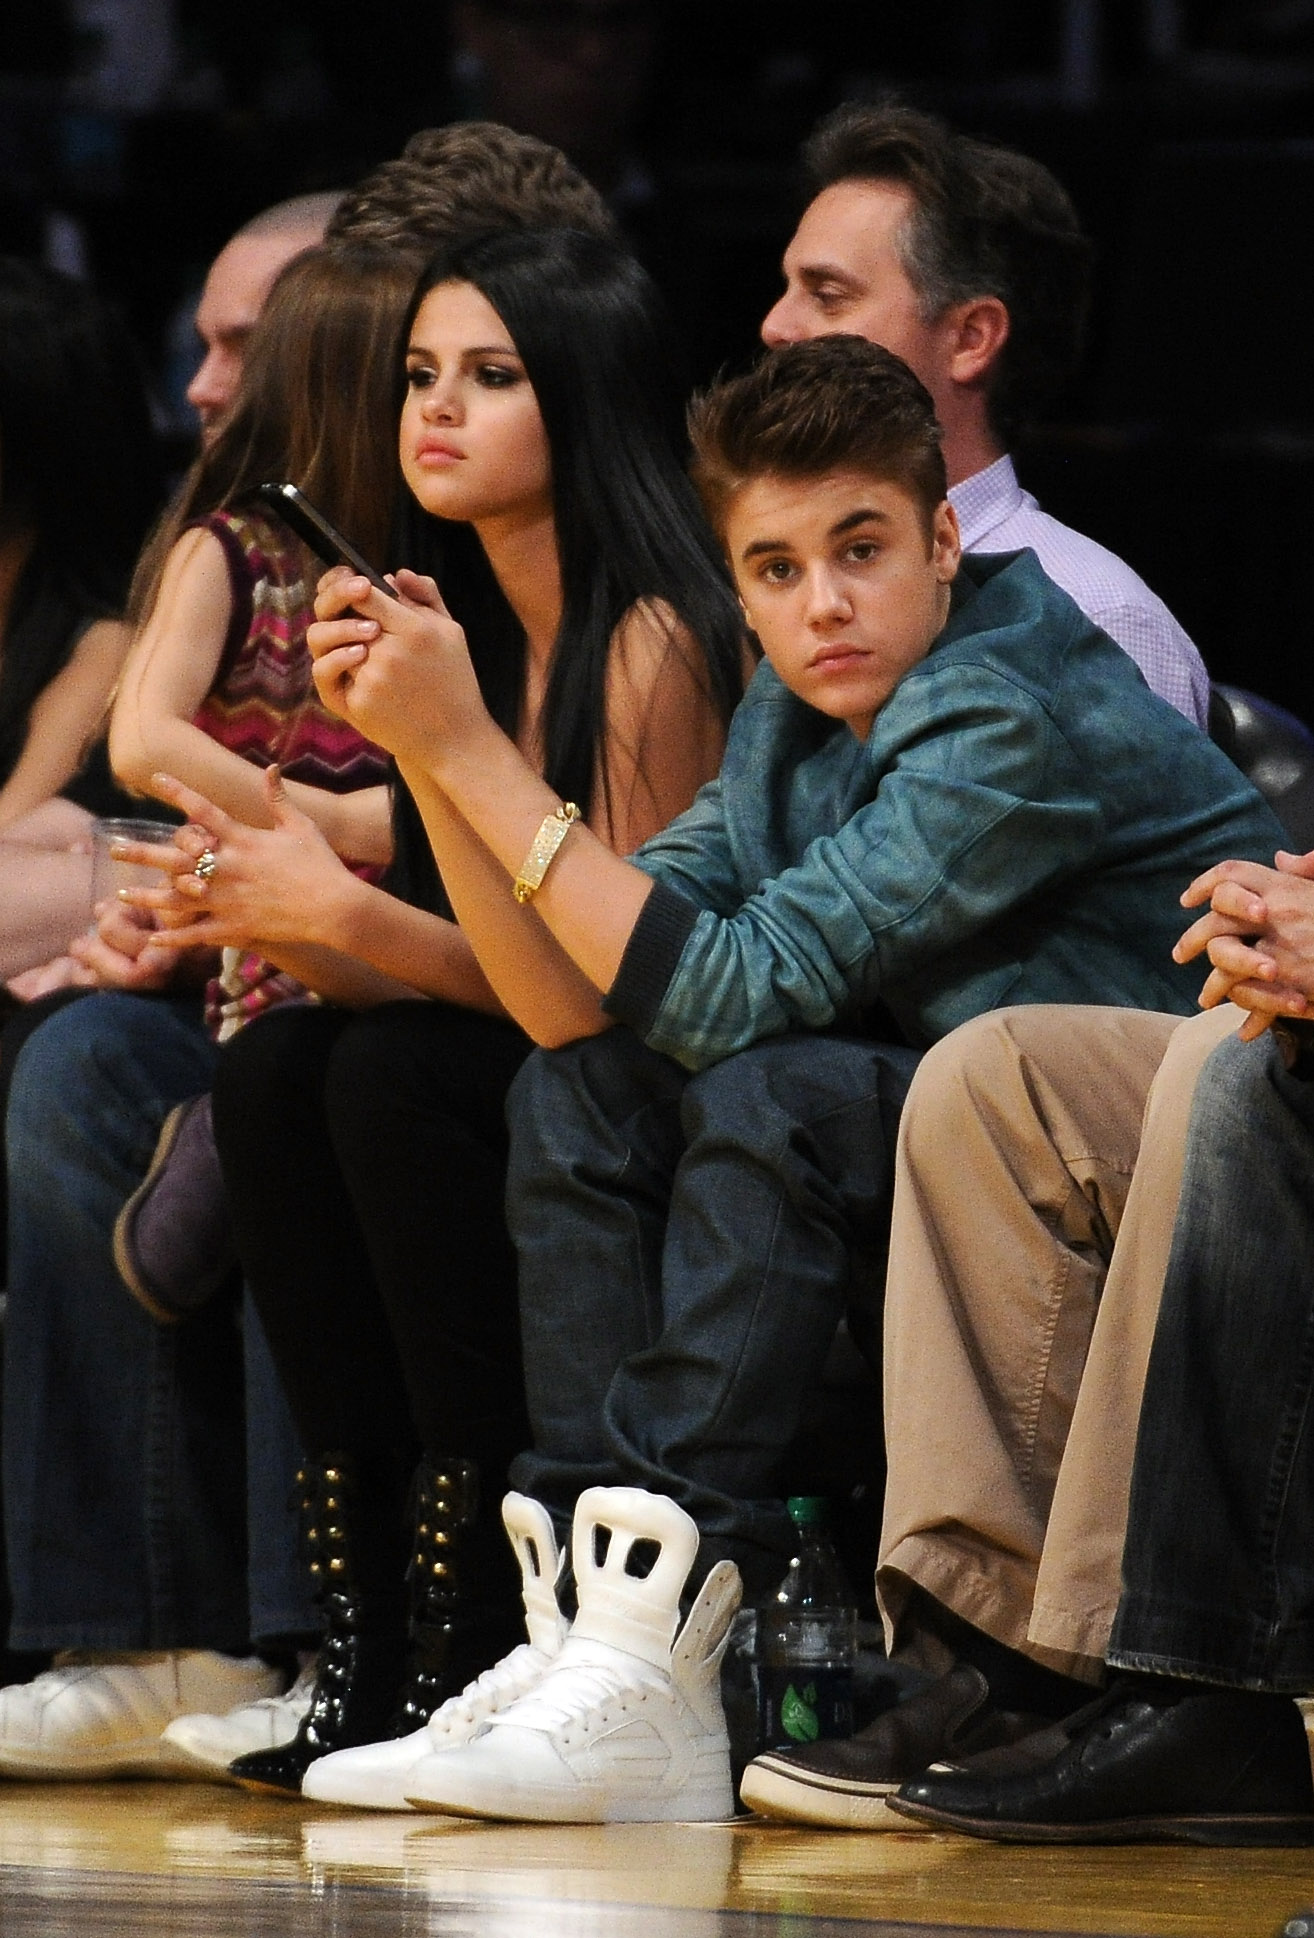 Justin Bieber and Selena Gomez 